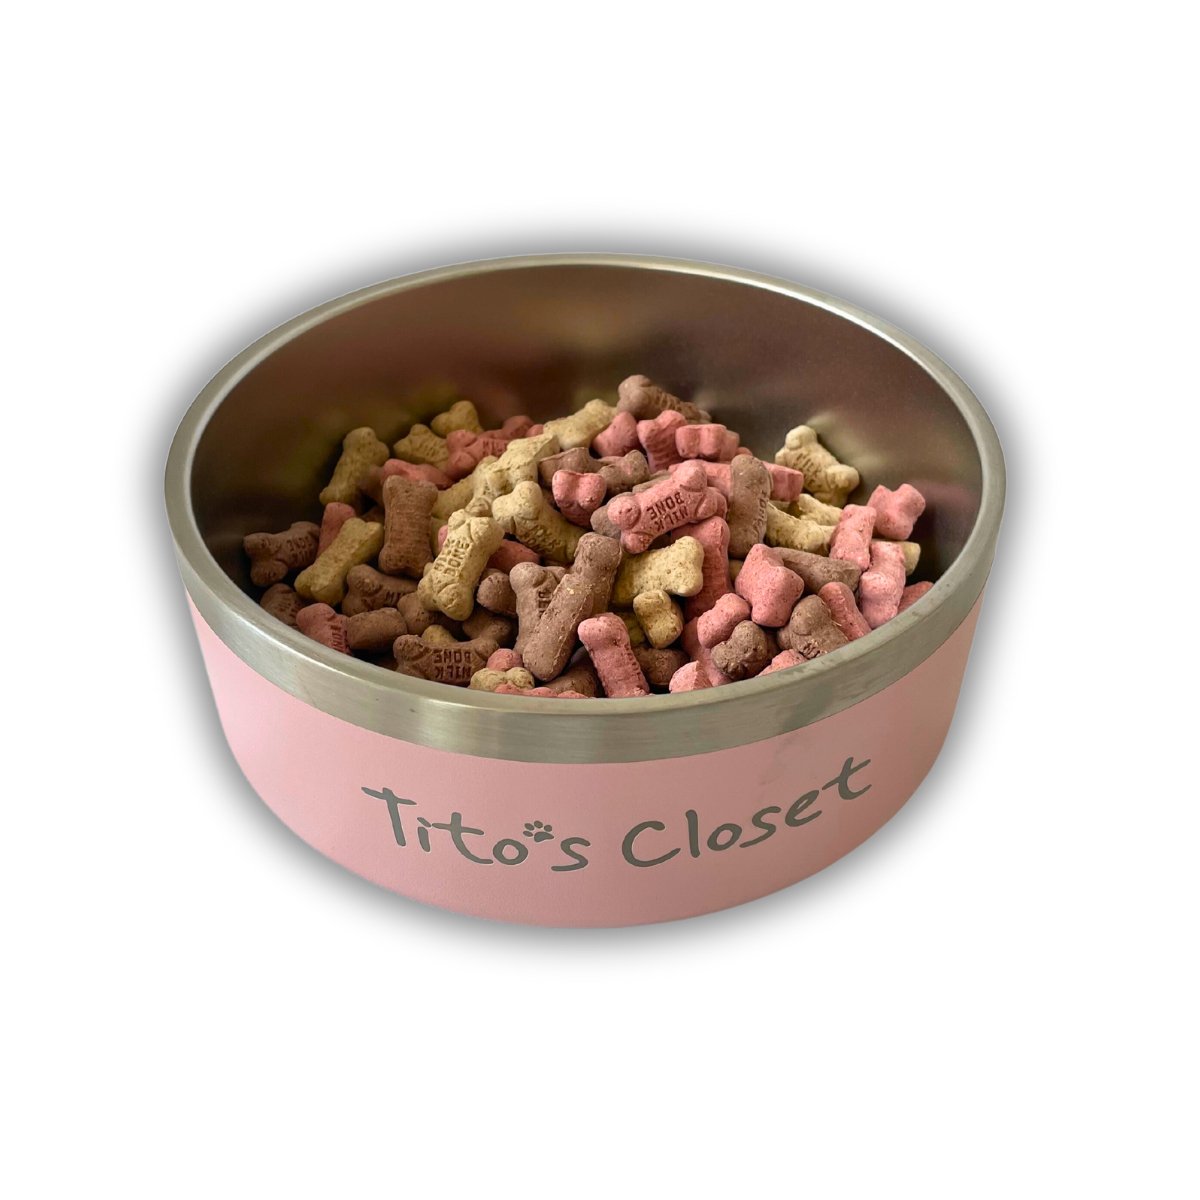 Tito's Dog Bowl